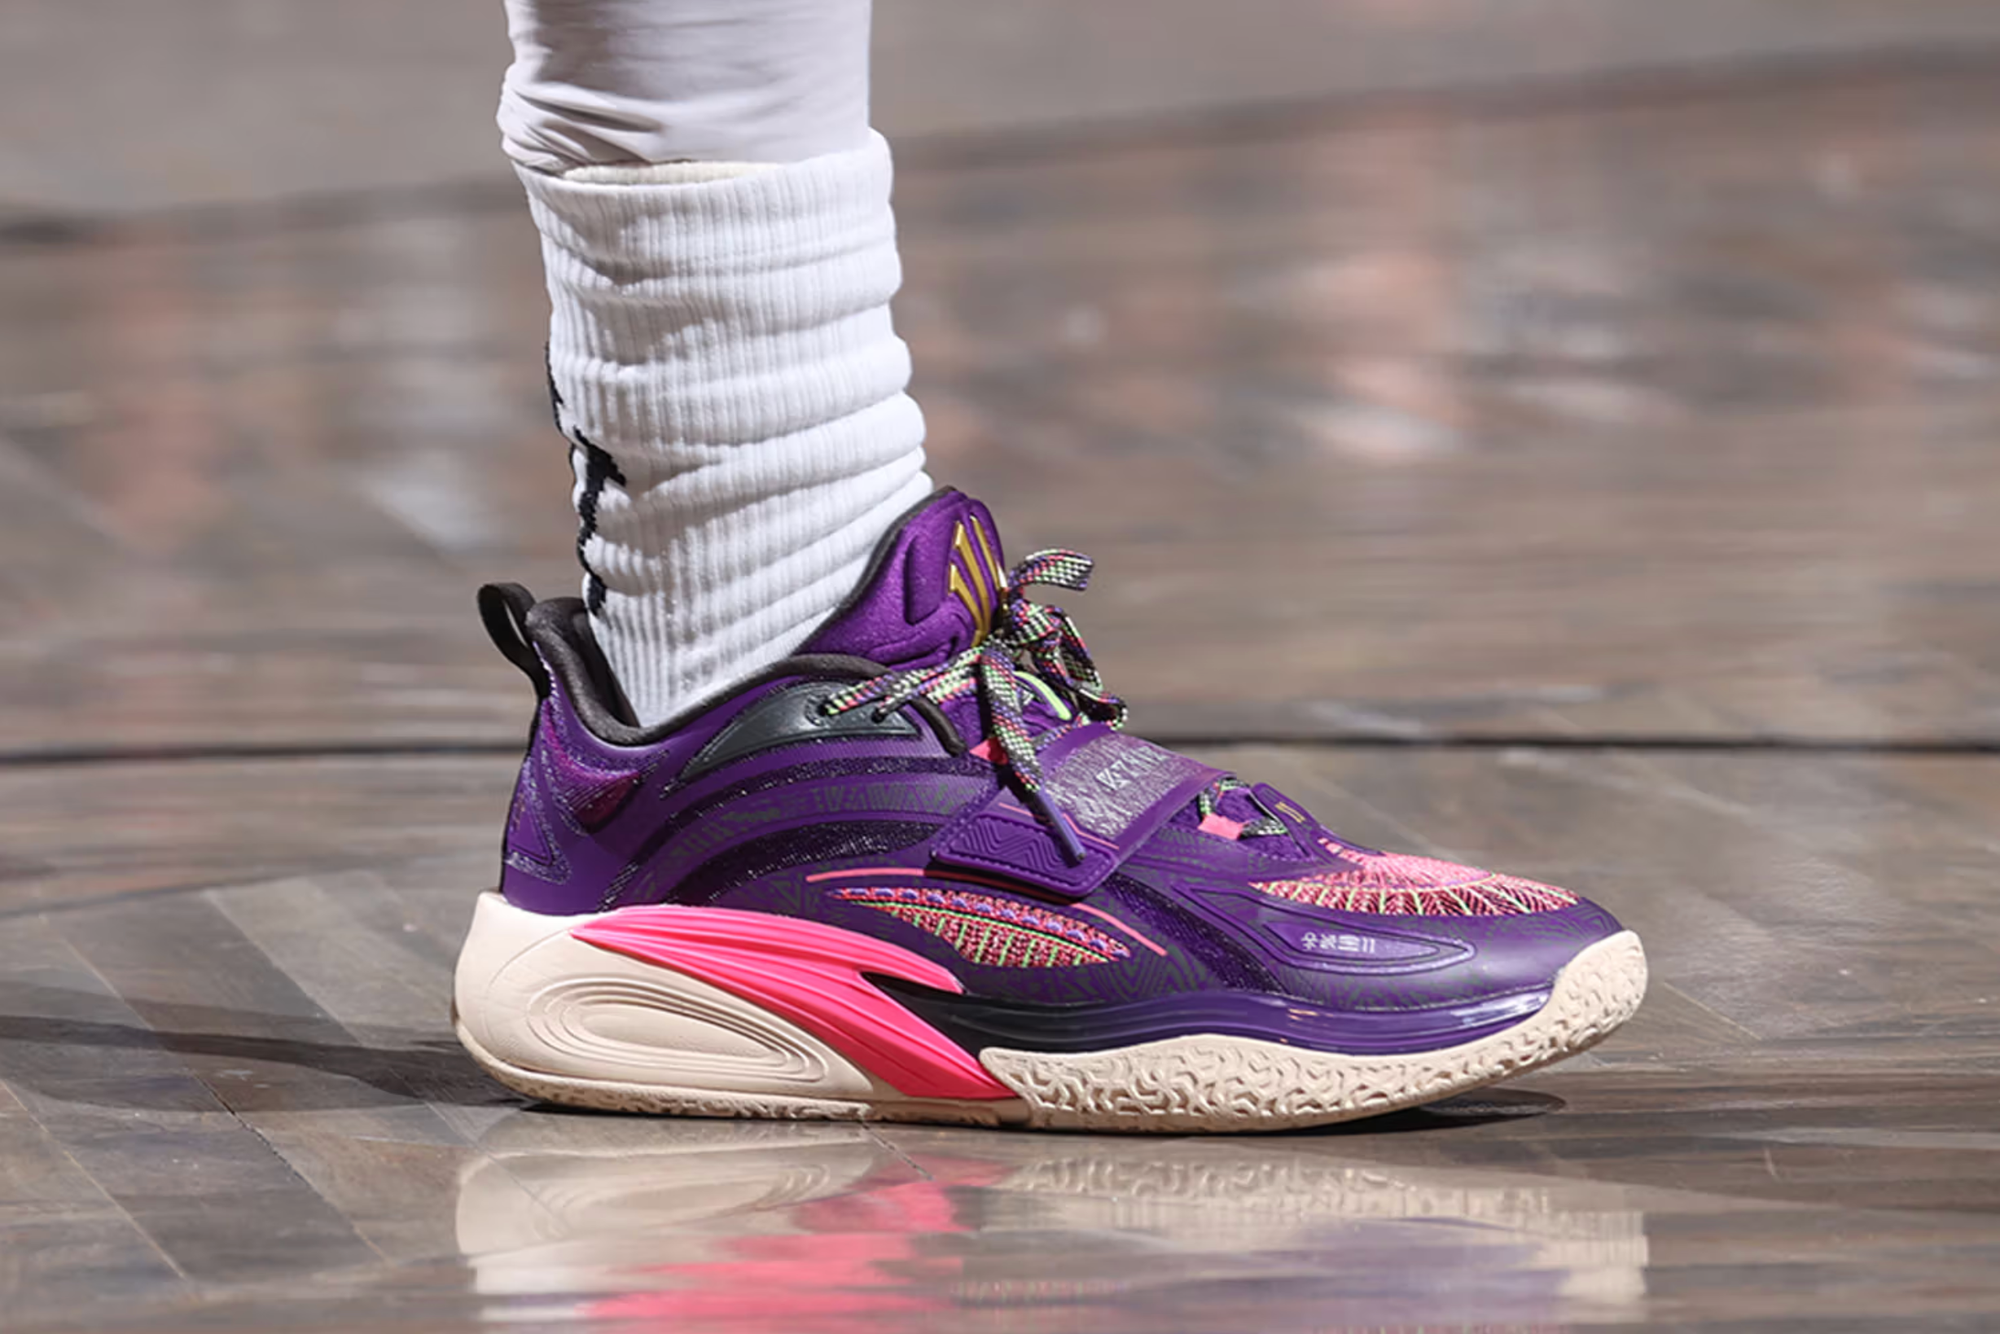 NBA 球星 KYRIE IRVING 率先著用 ANTA 簽名鞋款 KAI1 ”ARTIST ON COURT“